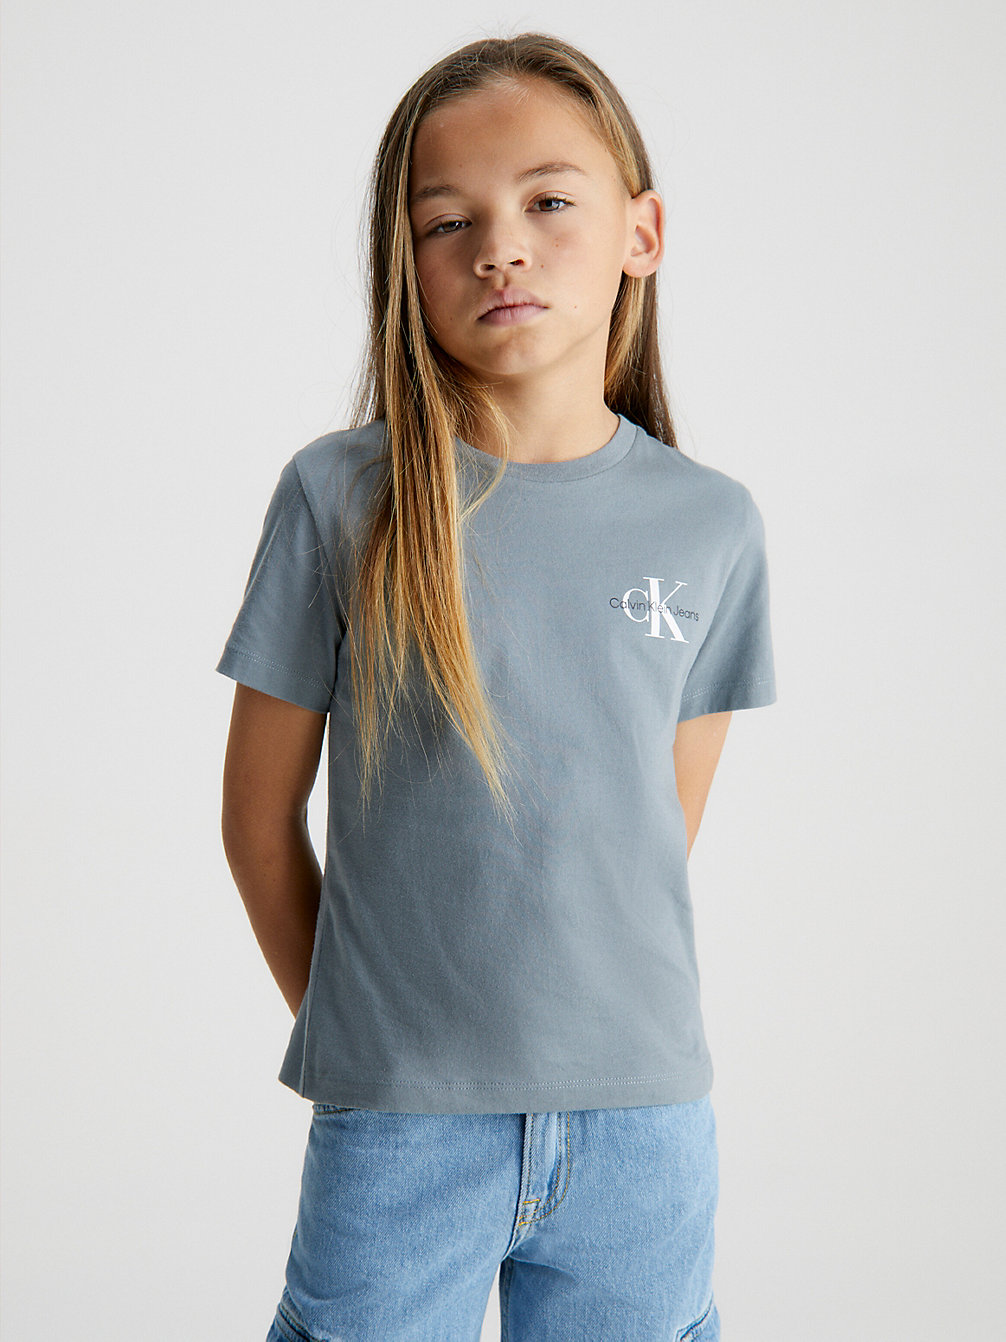 OVERCAST GREY Organic Cotton T-Shirt undefined boys Calvin Klein